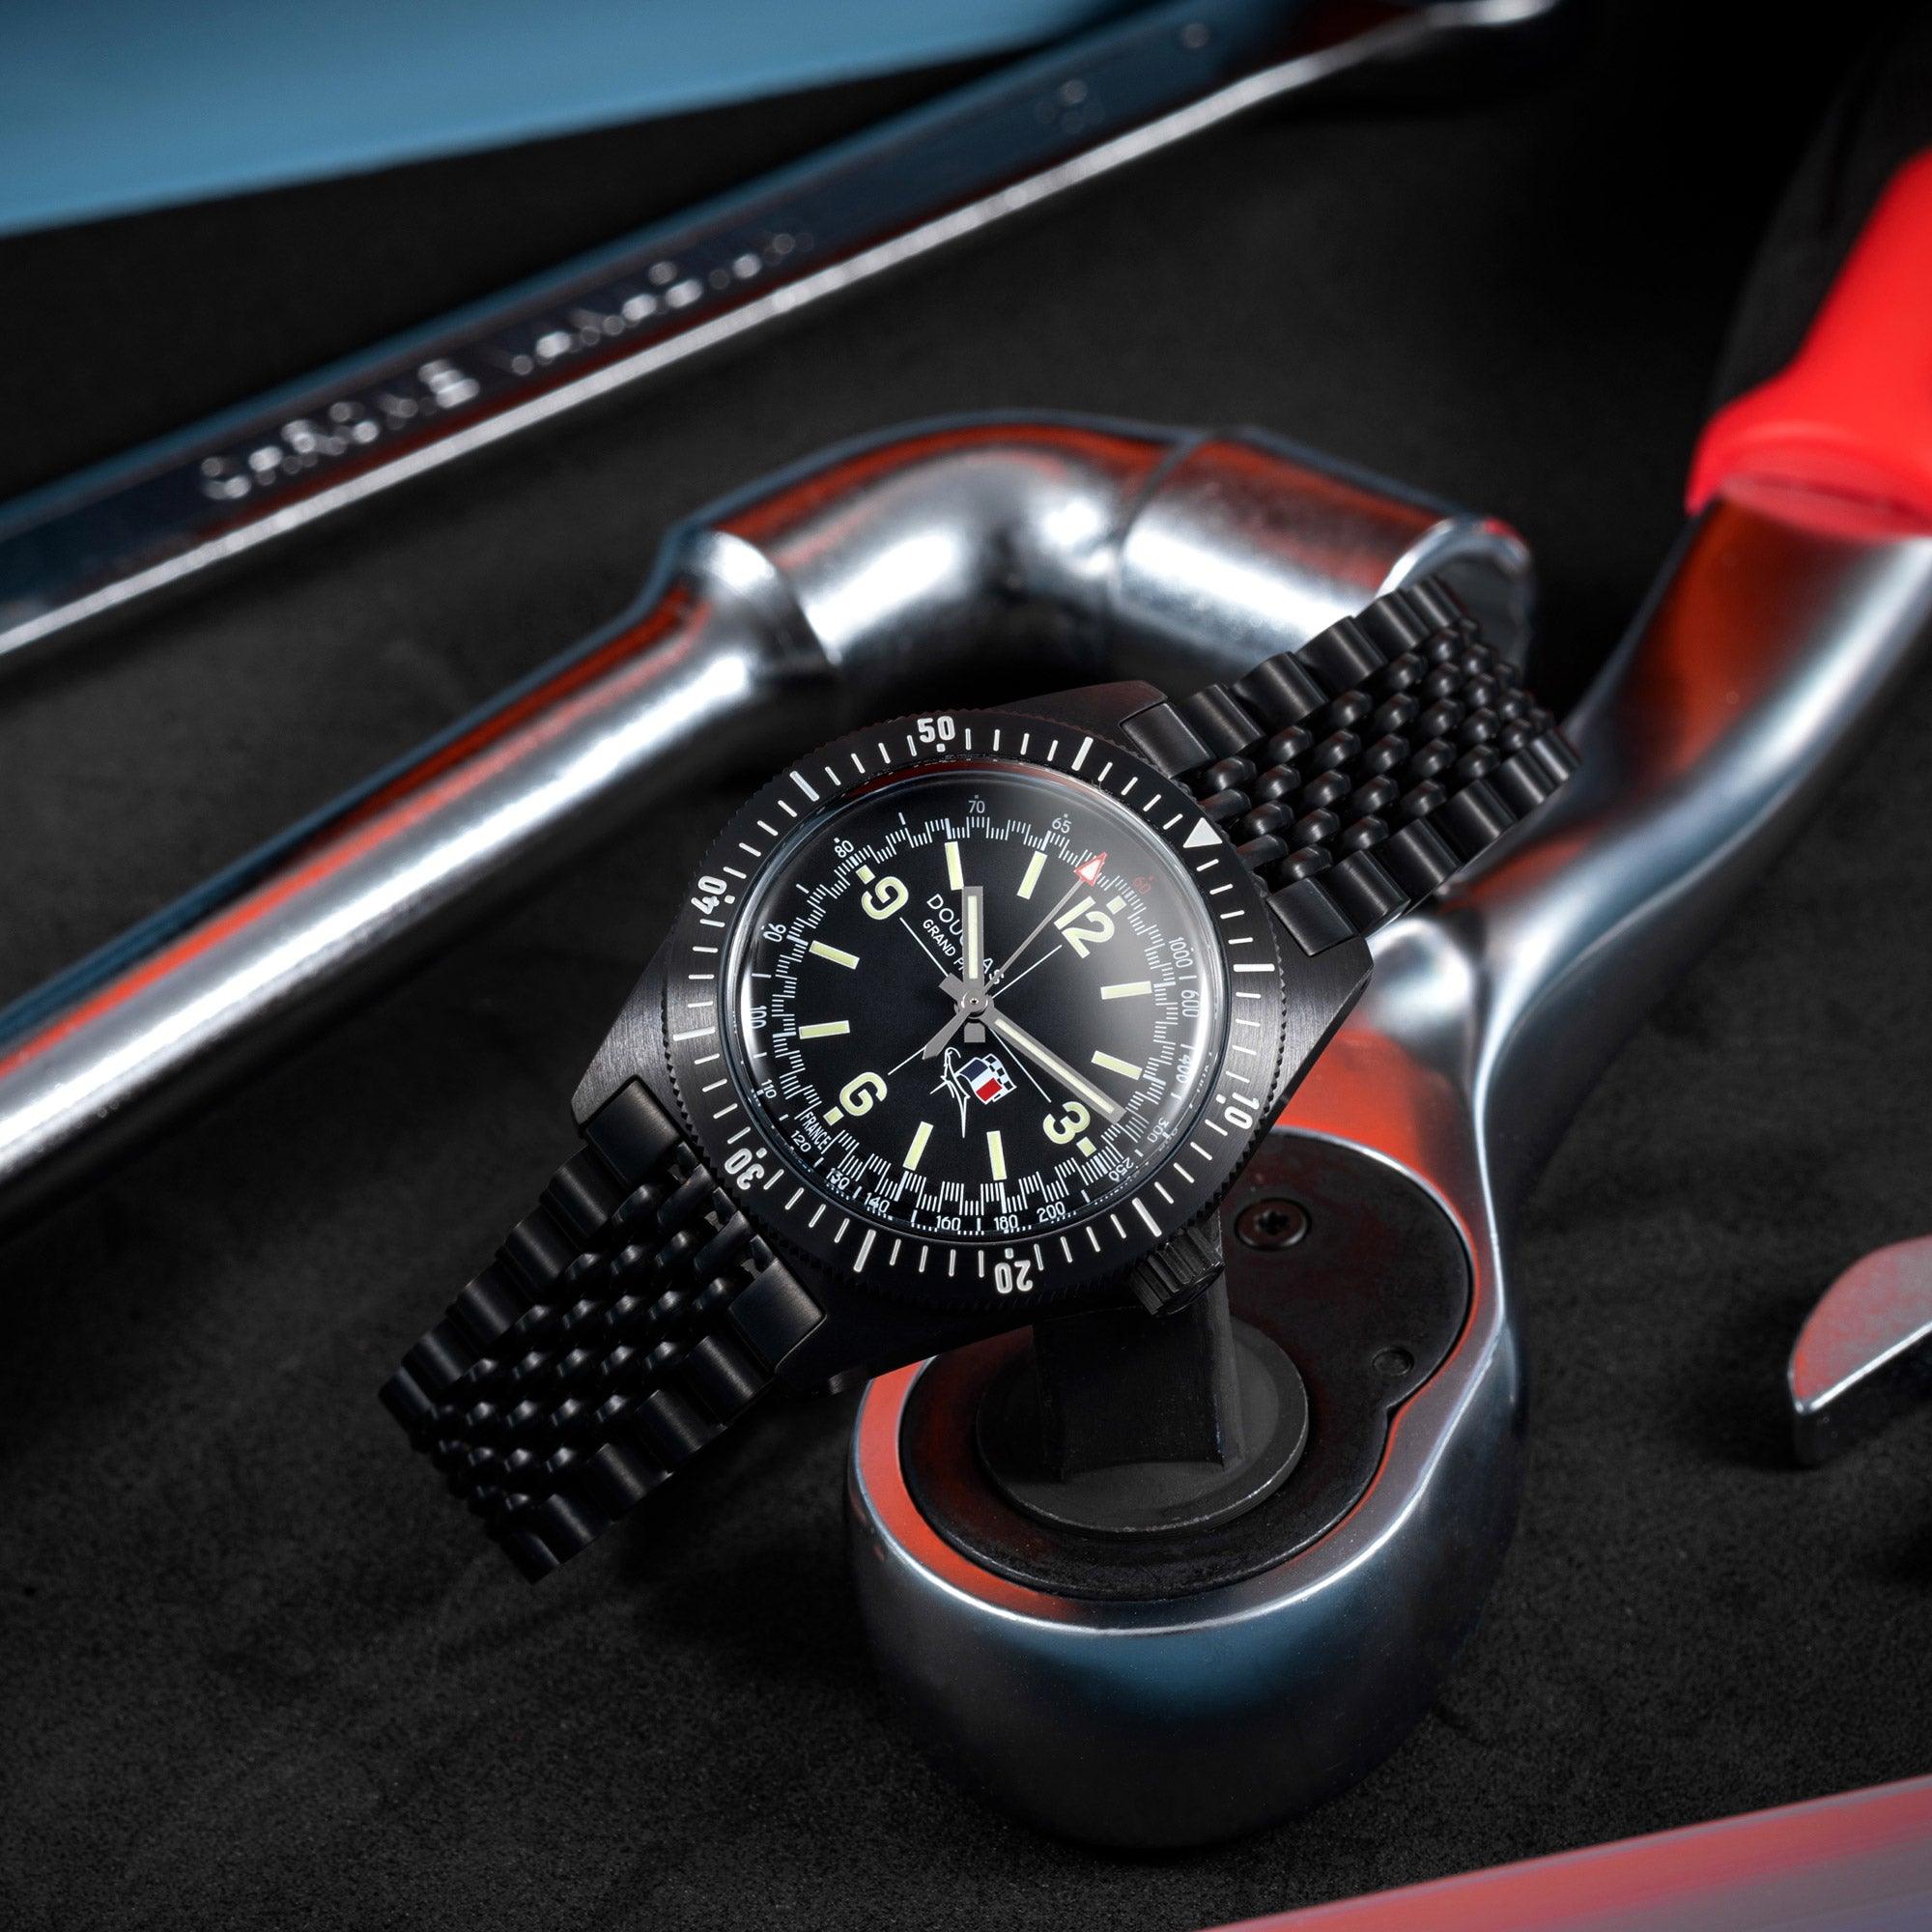 Grand Prix Professional Racing Watch - Black PVD - René Bonnet Djet 1962 Limited Edition - Wolbrook Watches